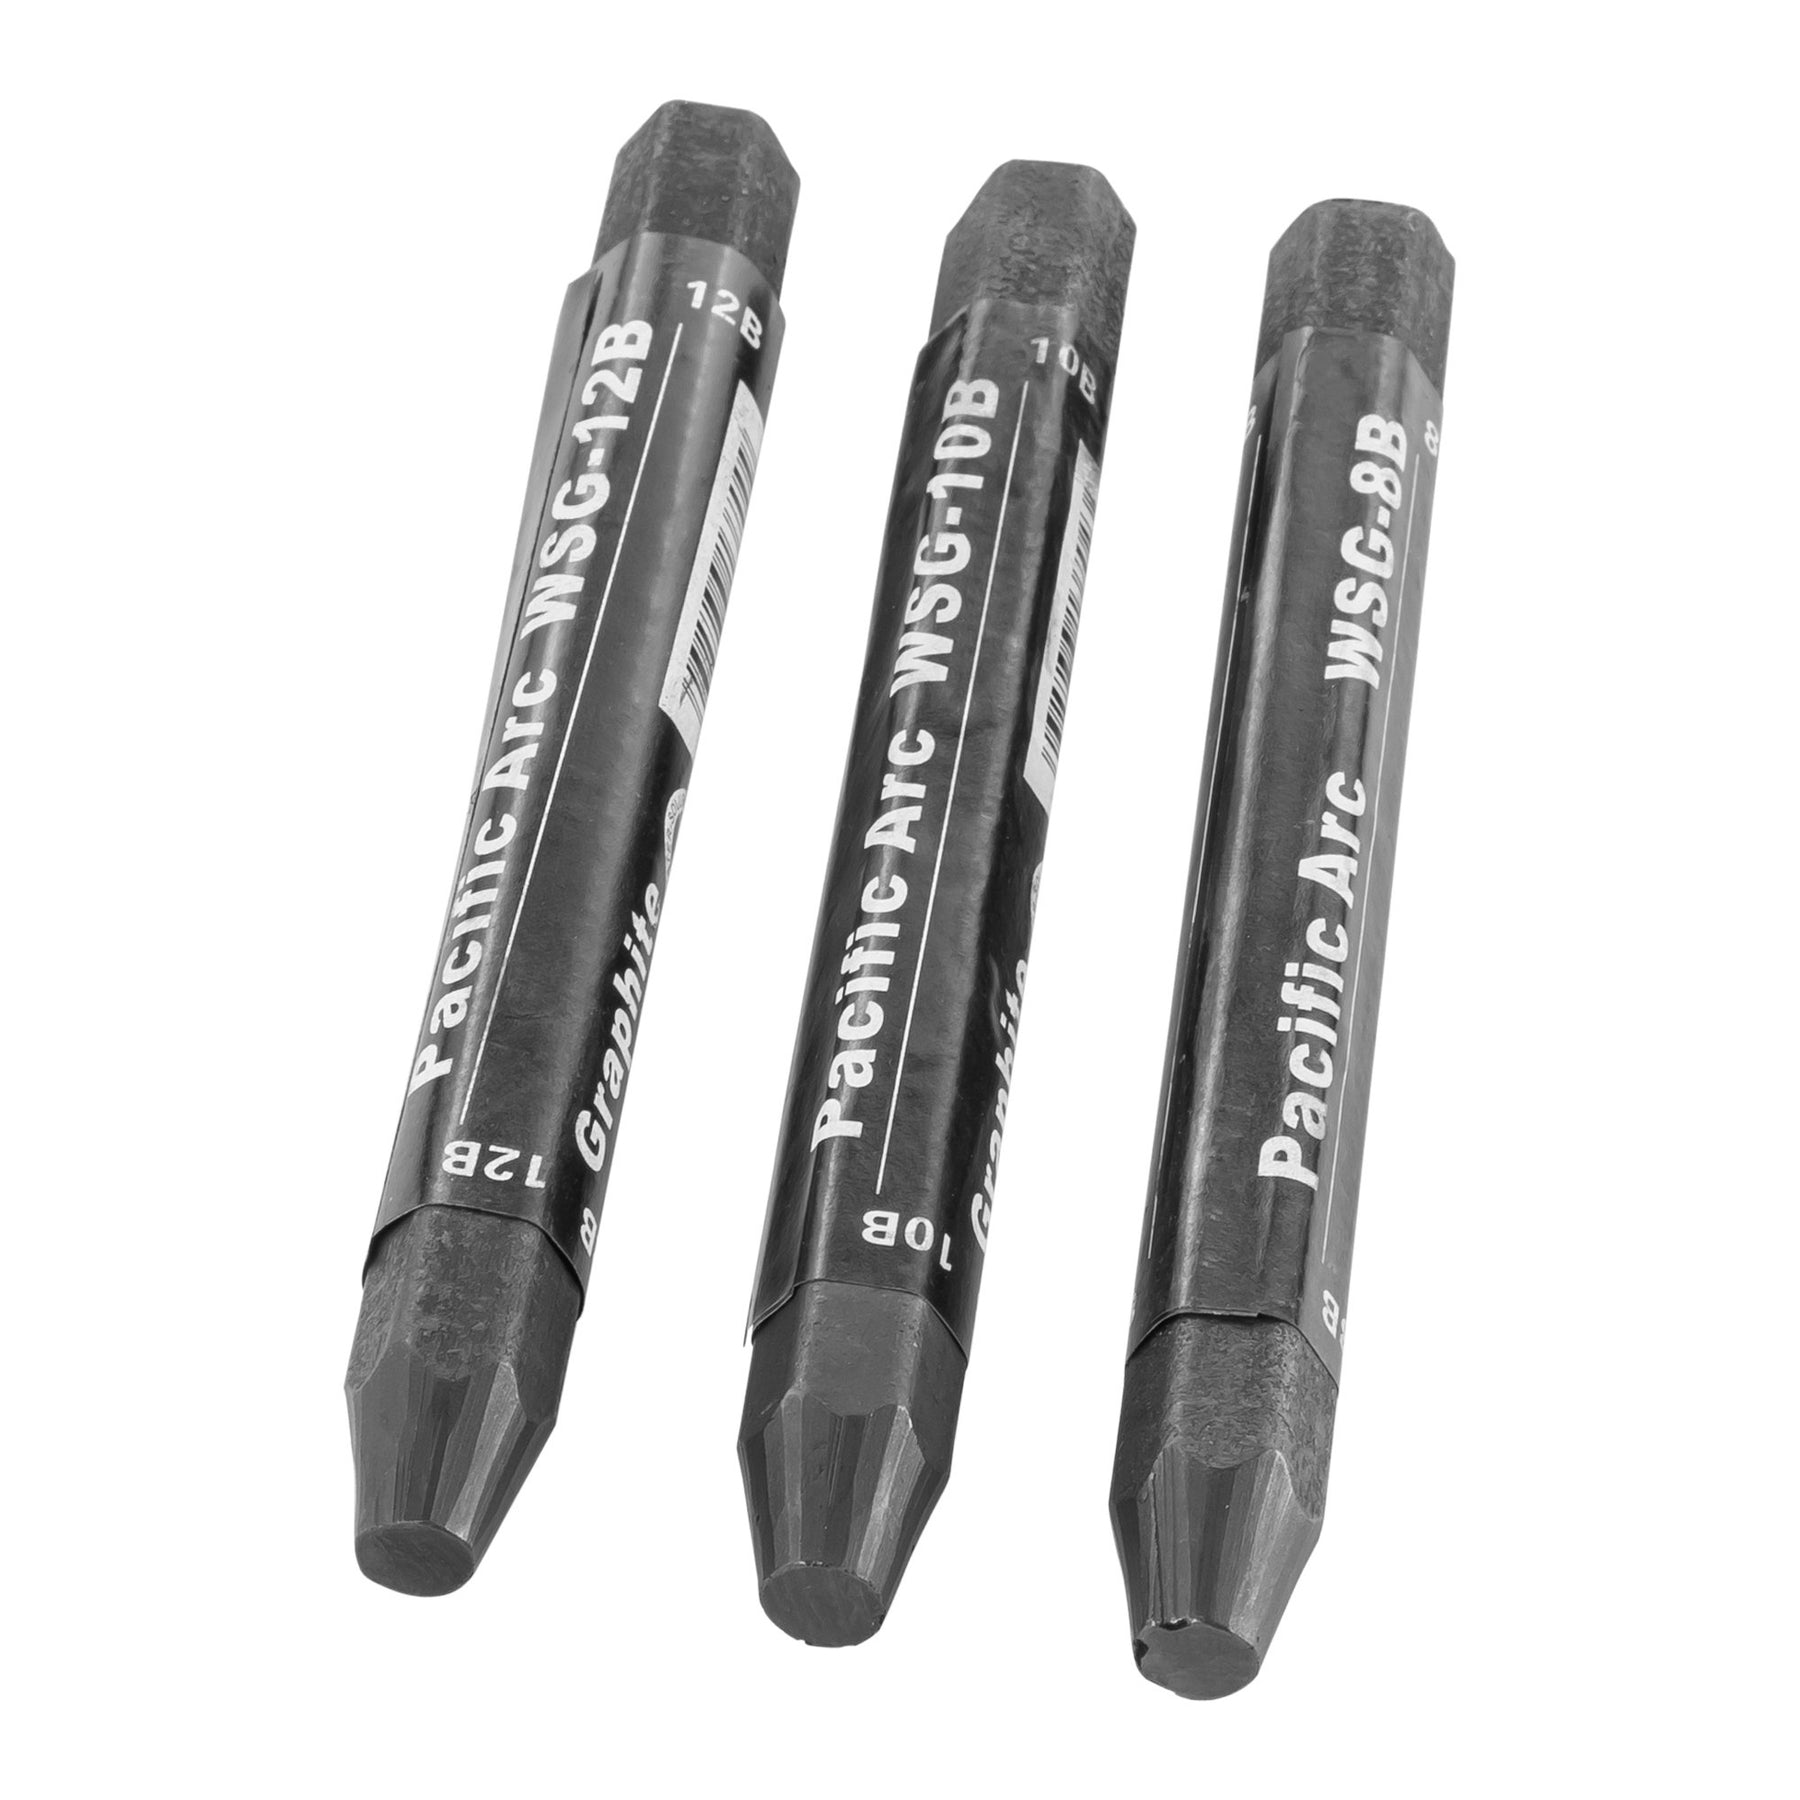  Pacific Arc Premium Graphite Drawing Pencils for